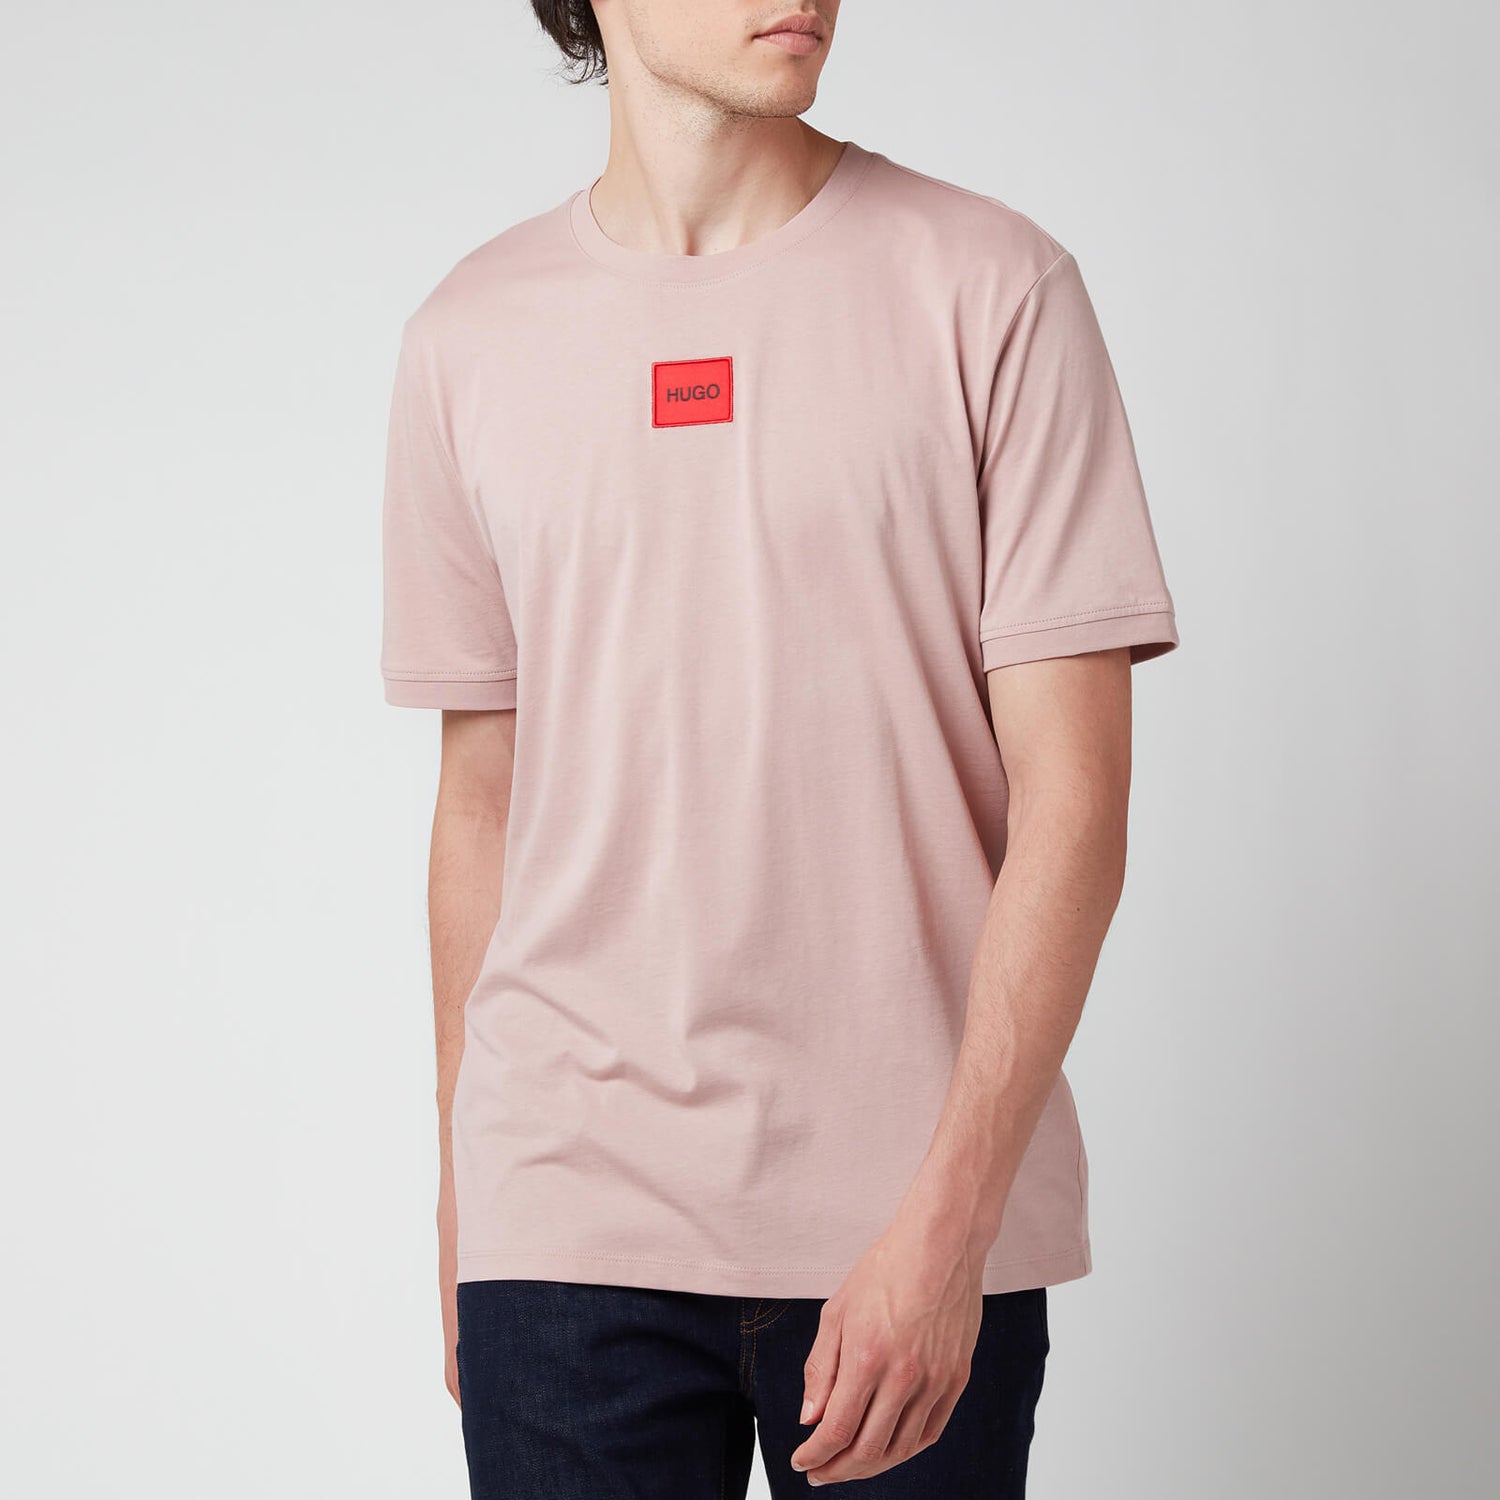 HUGO Men's Regular Fit Red Logo T-Shirt - Light Pink